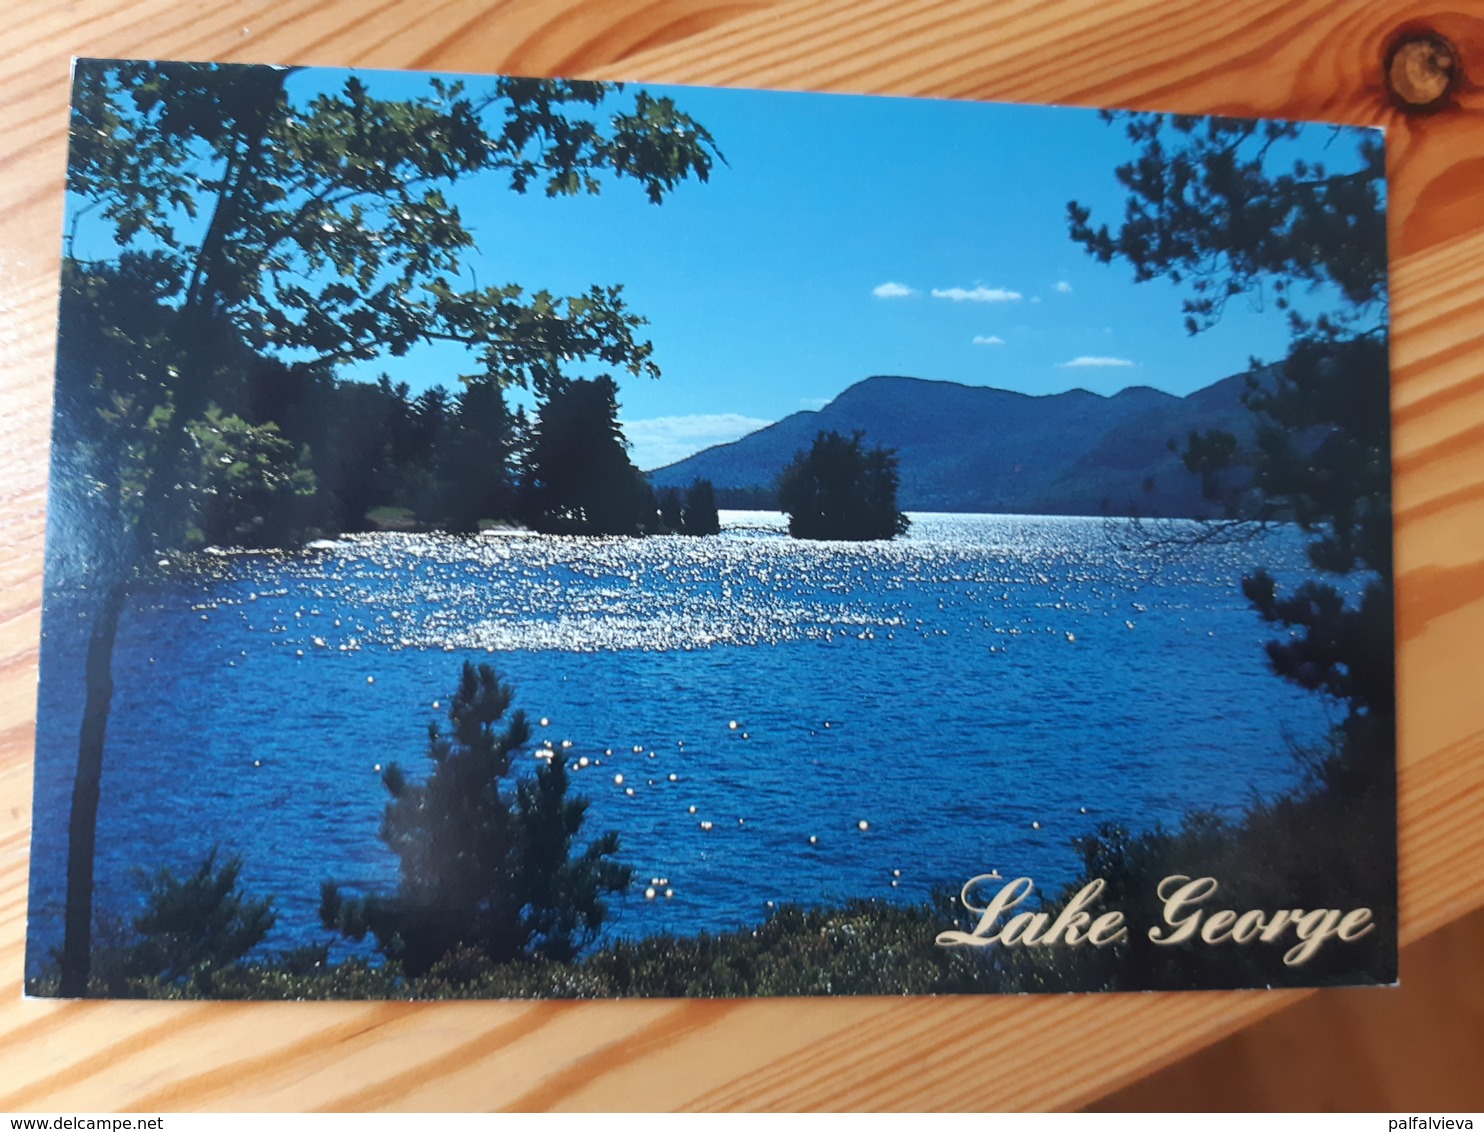 Postcard, USA - Lake George, New York, Mint - Lake George